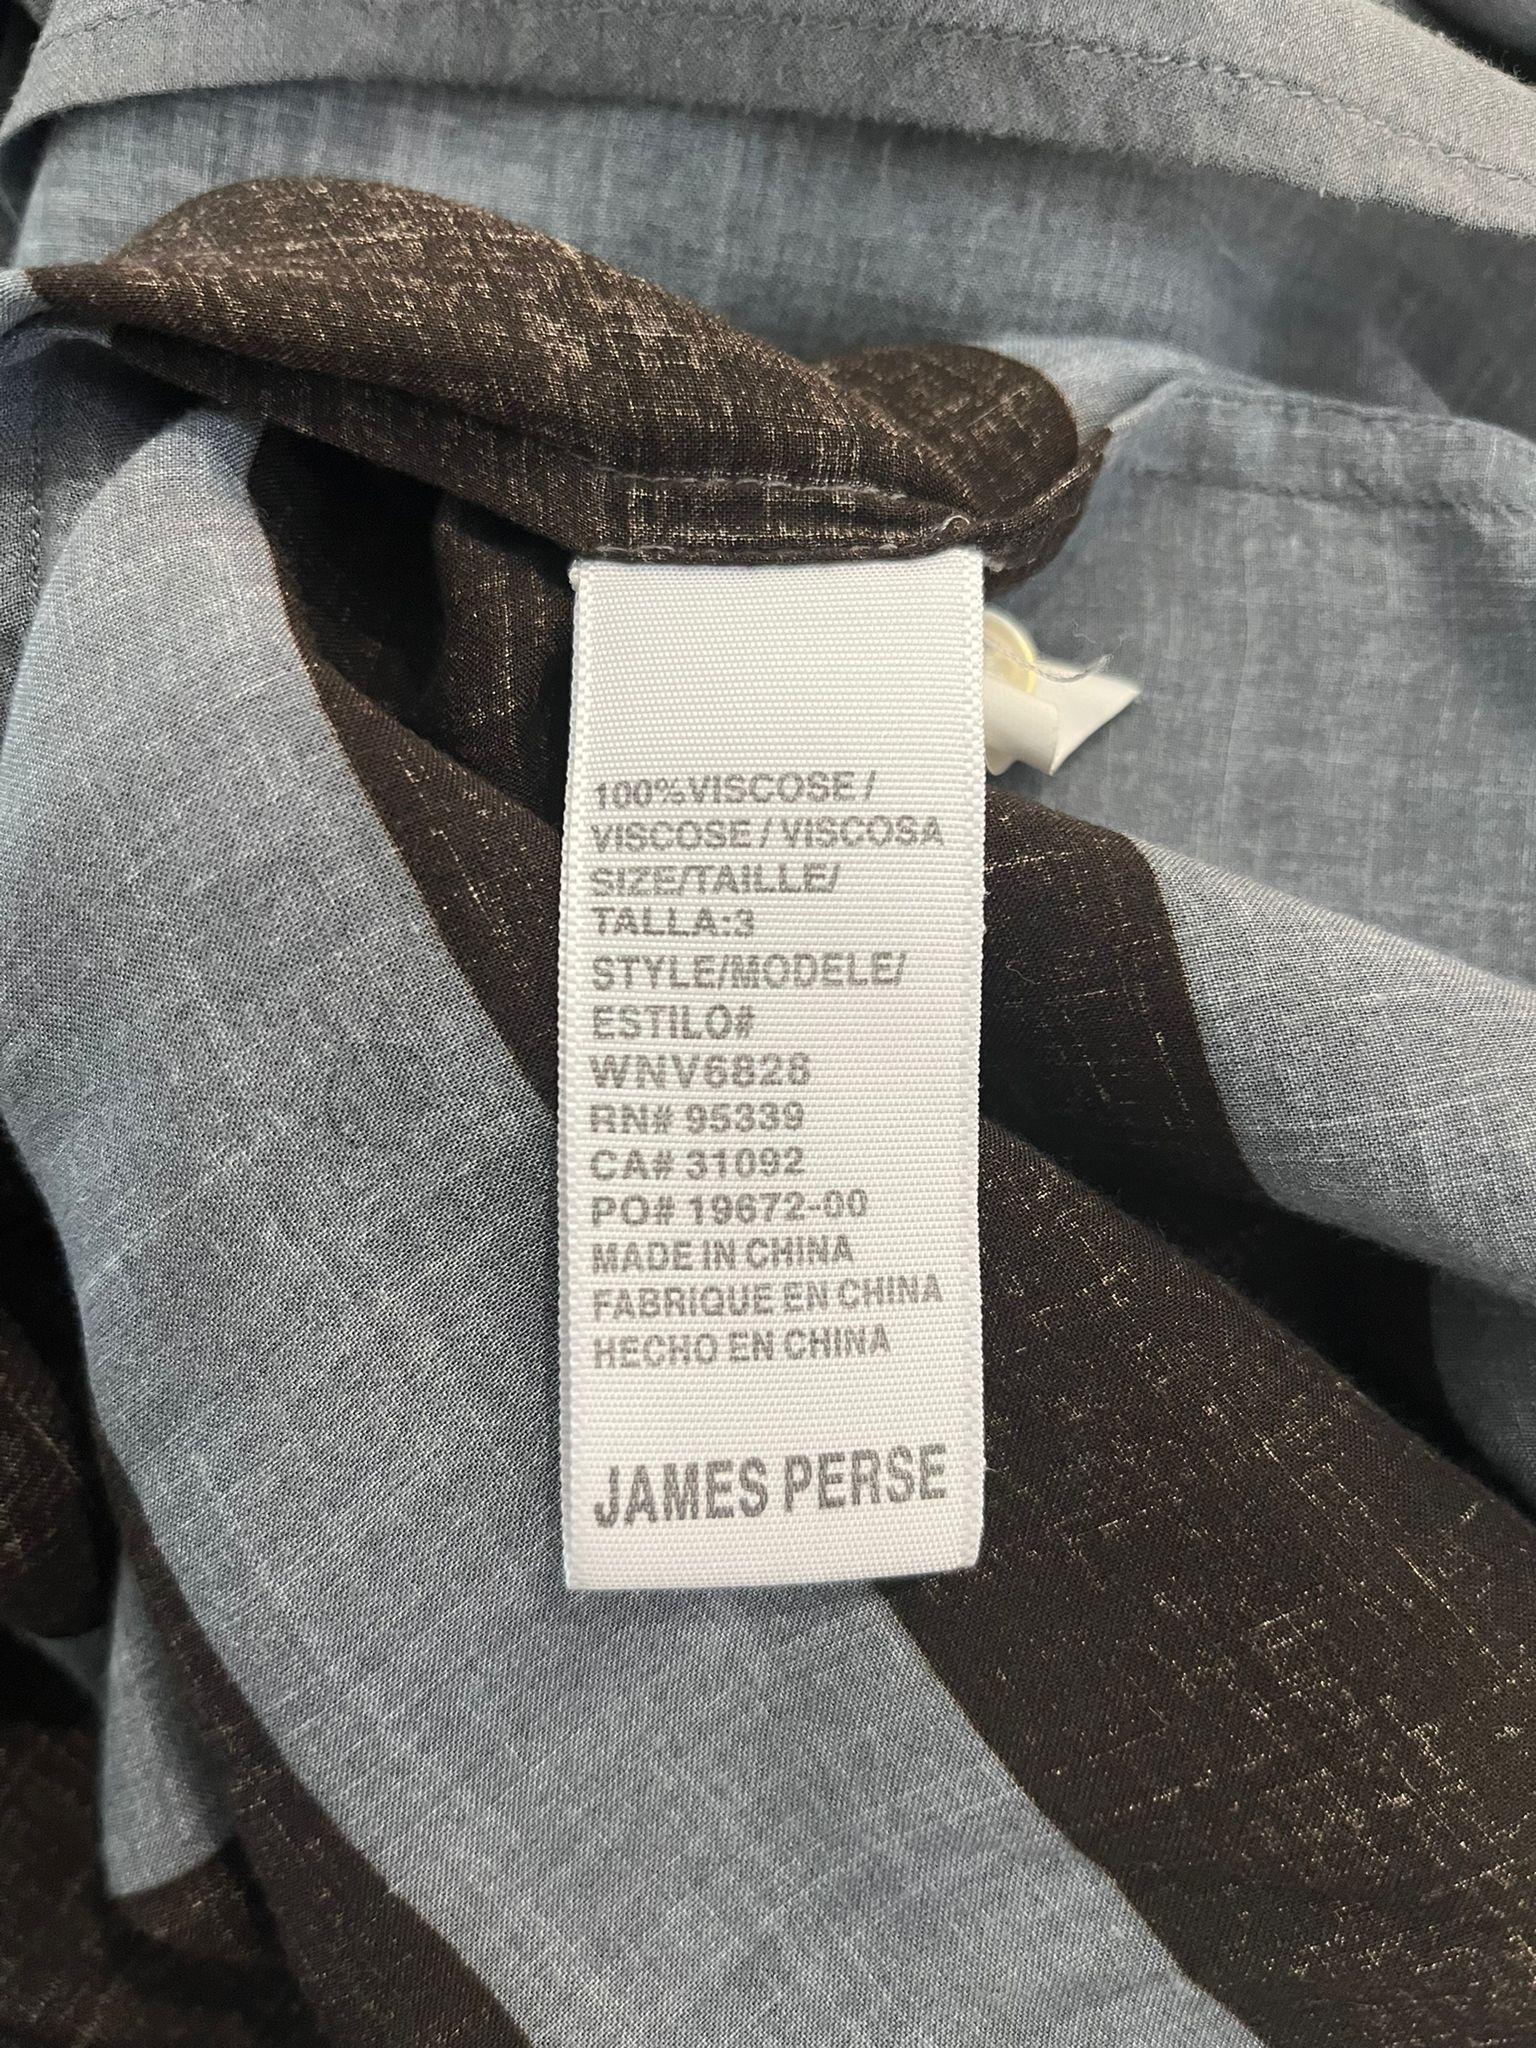 James Perse Shirt Midi Dress For Sale 2